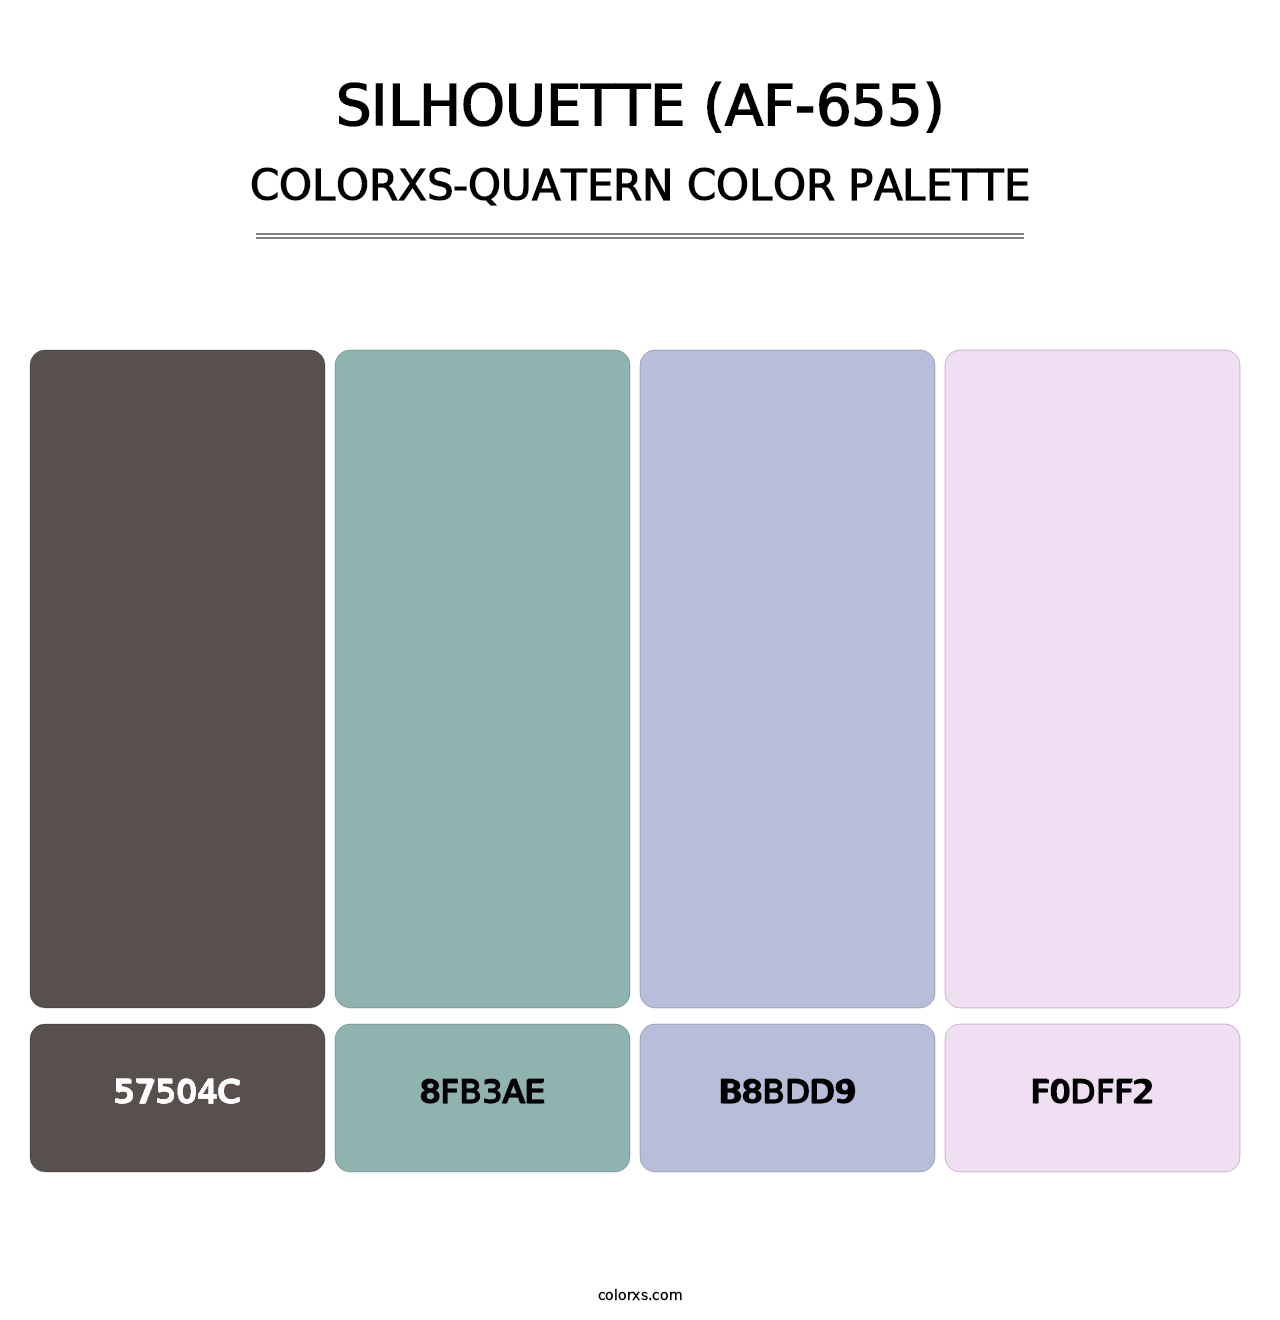 Silhouette (AF-655) - Colorxs Quatern Palette